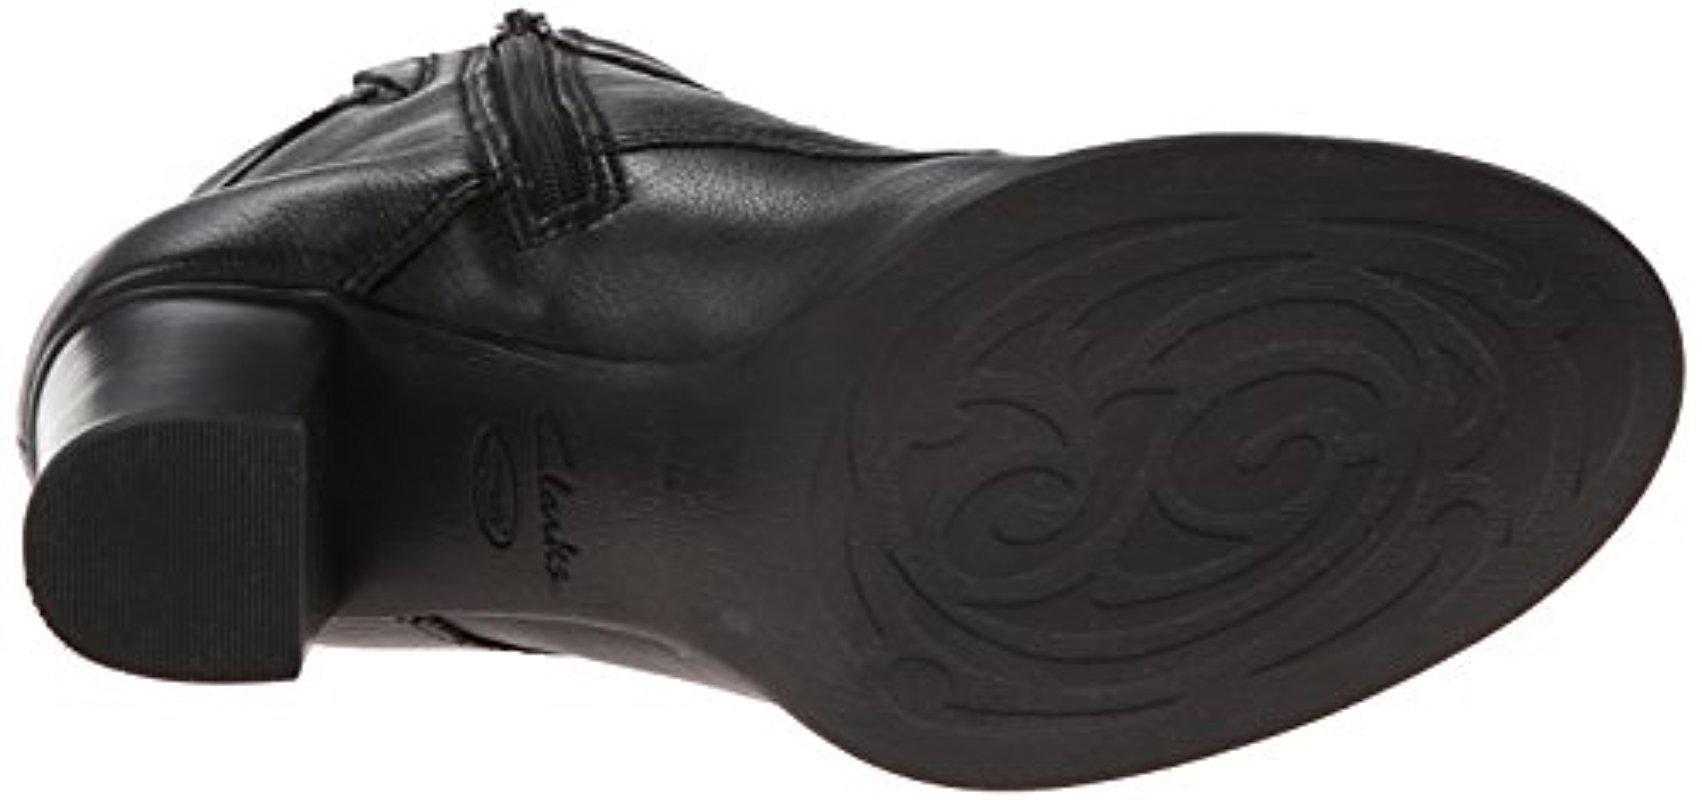 Details about   Clarks Jolissa Gypsum Womens 5 Black Leather Ankle Boots Block Heel Toe Size 5 M